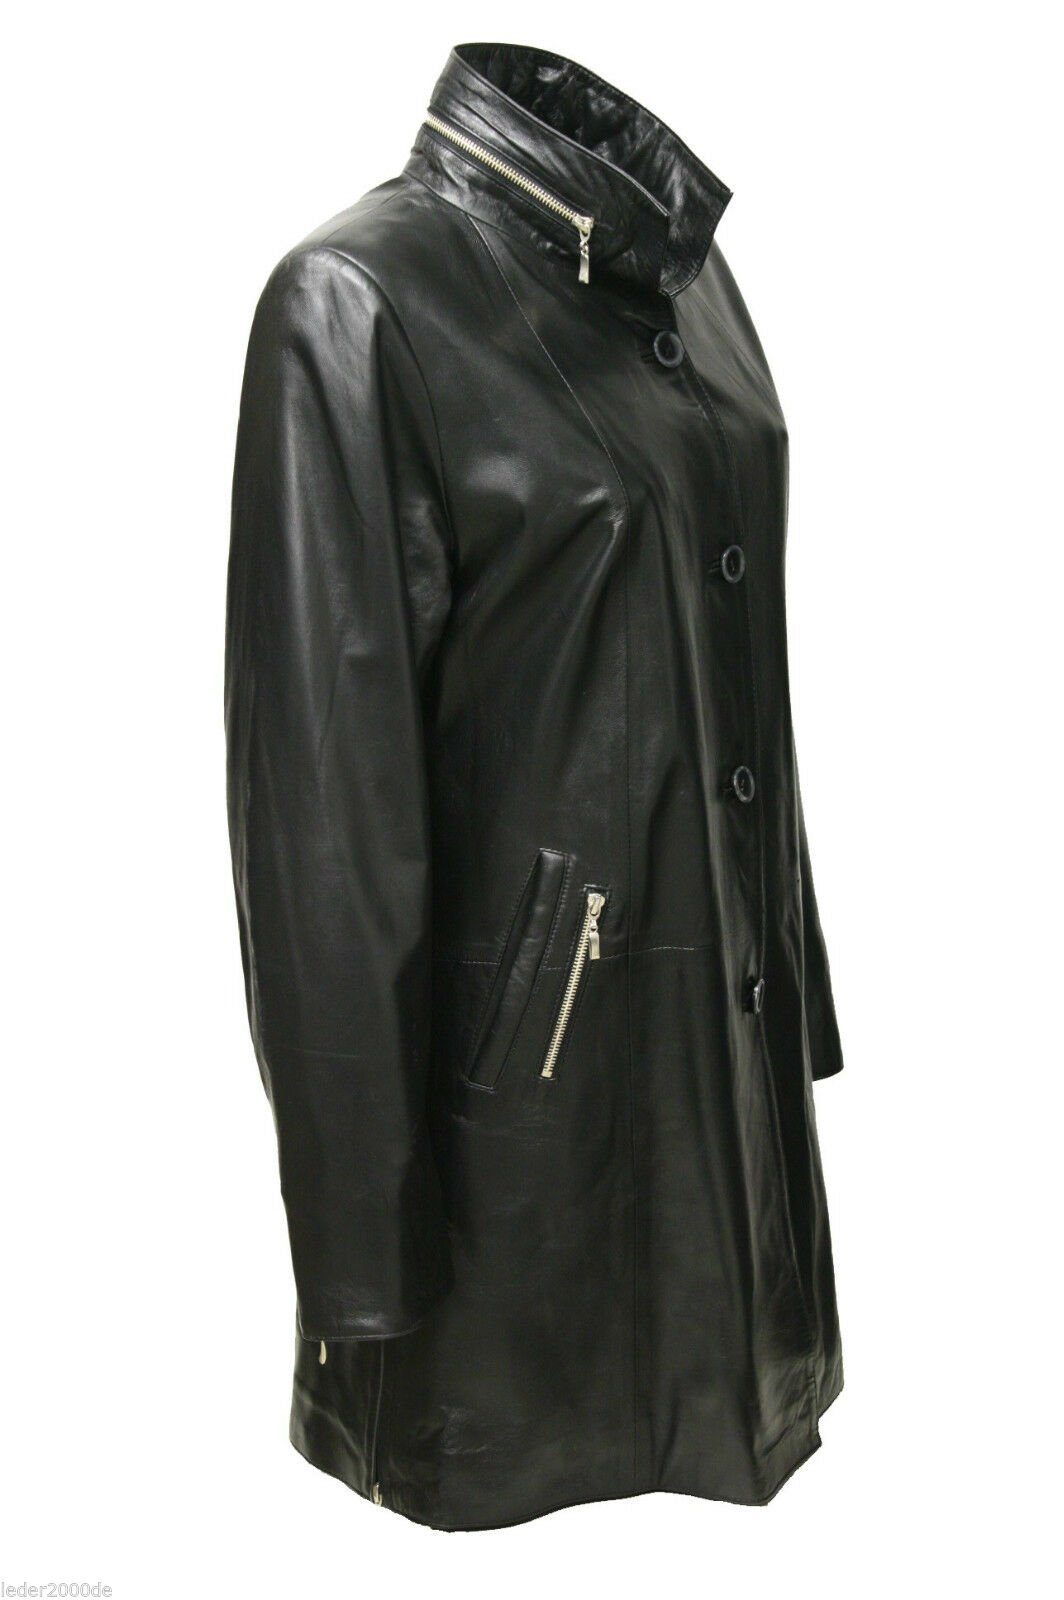 auch Leather grossen Größen Belinda Ledermantel in Zimmert